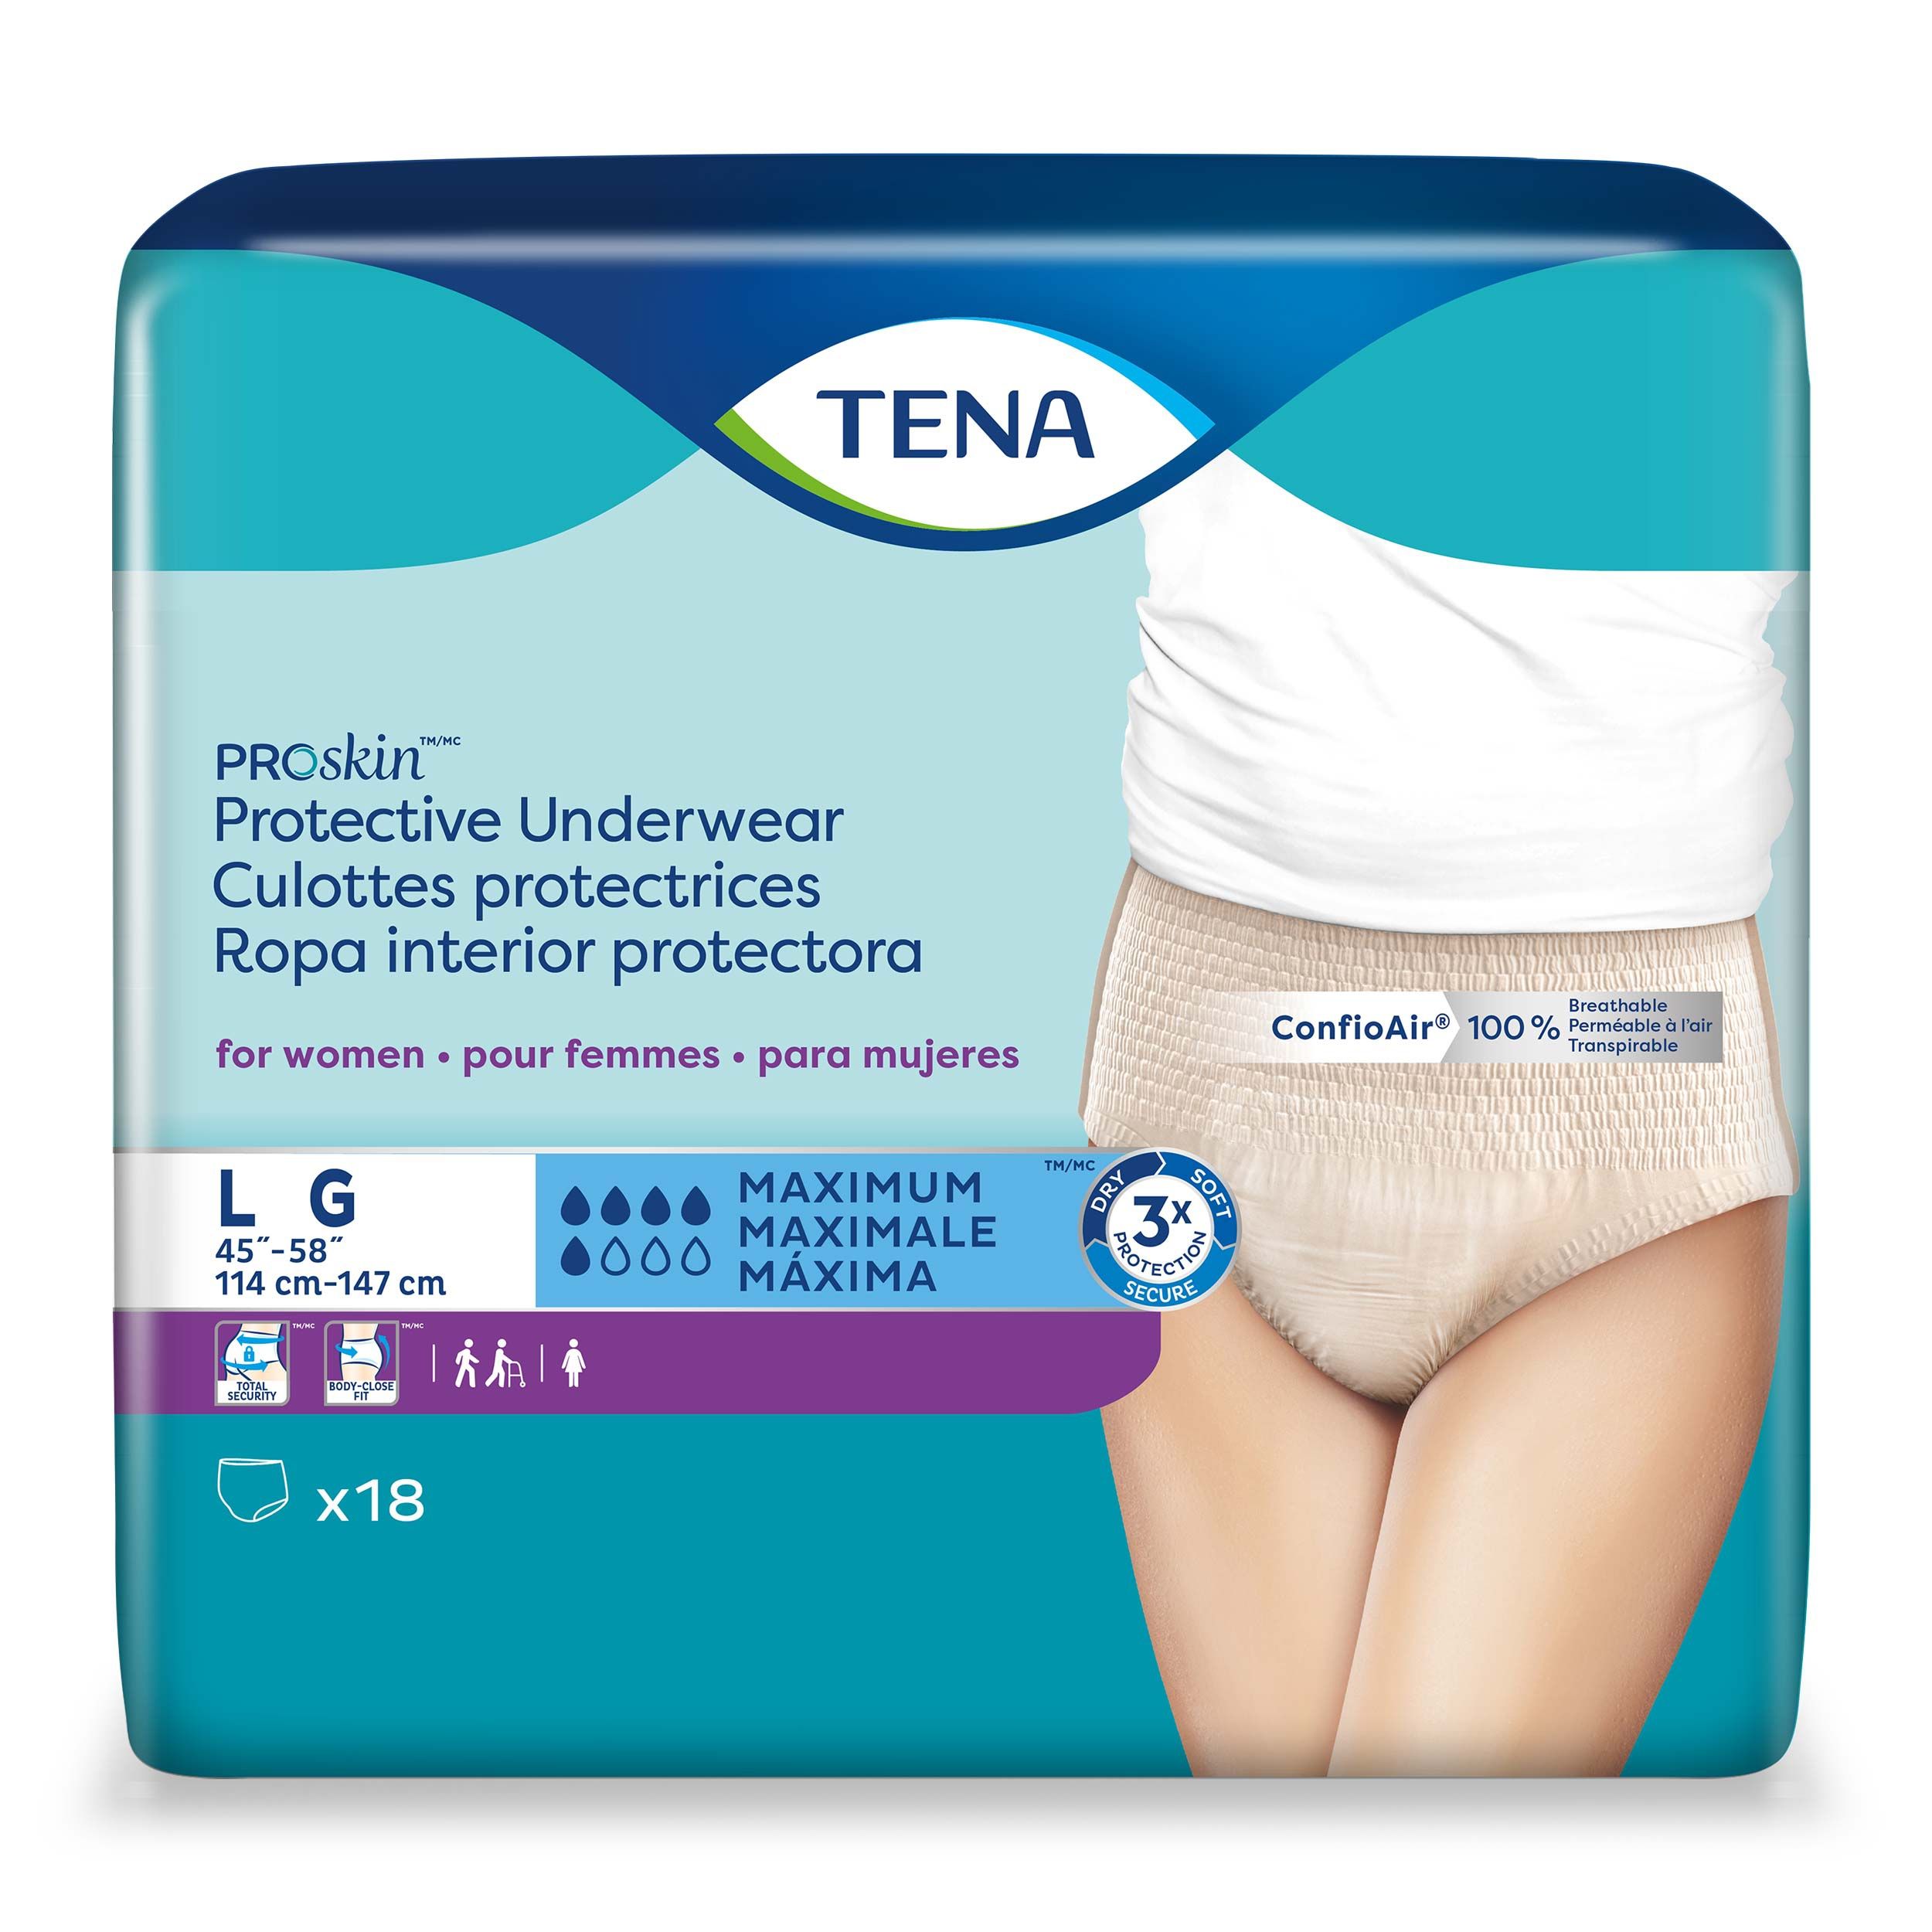 TENA Men's Super Plus Protective Underwear, L/XL